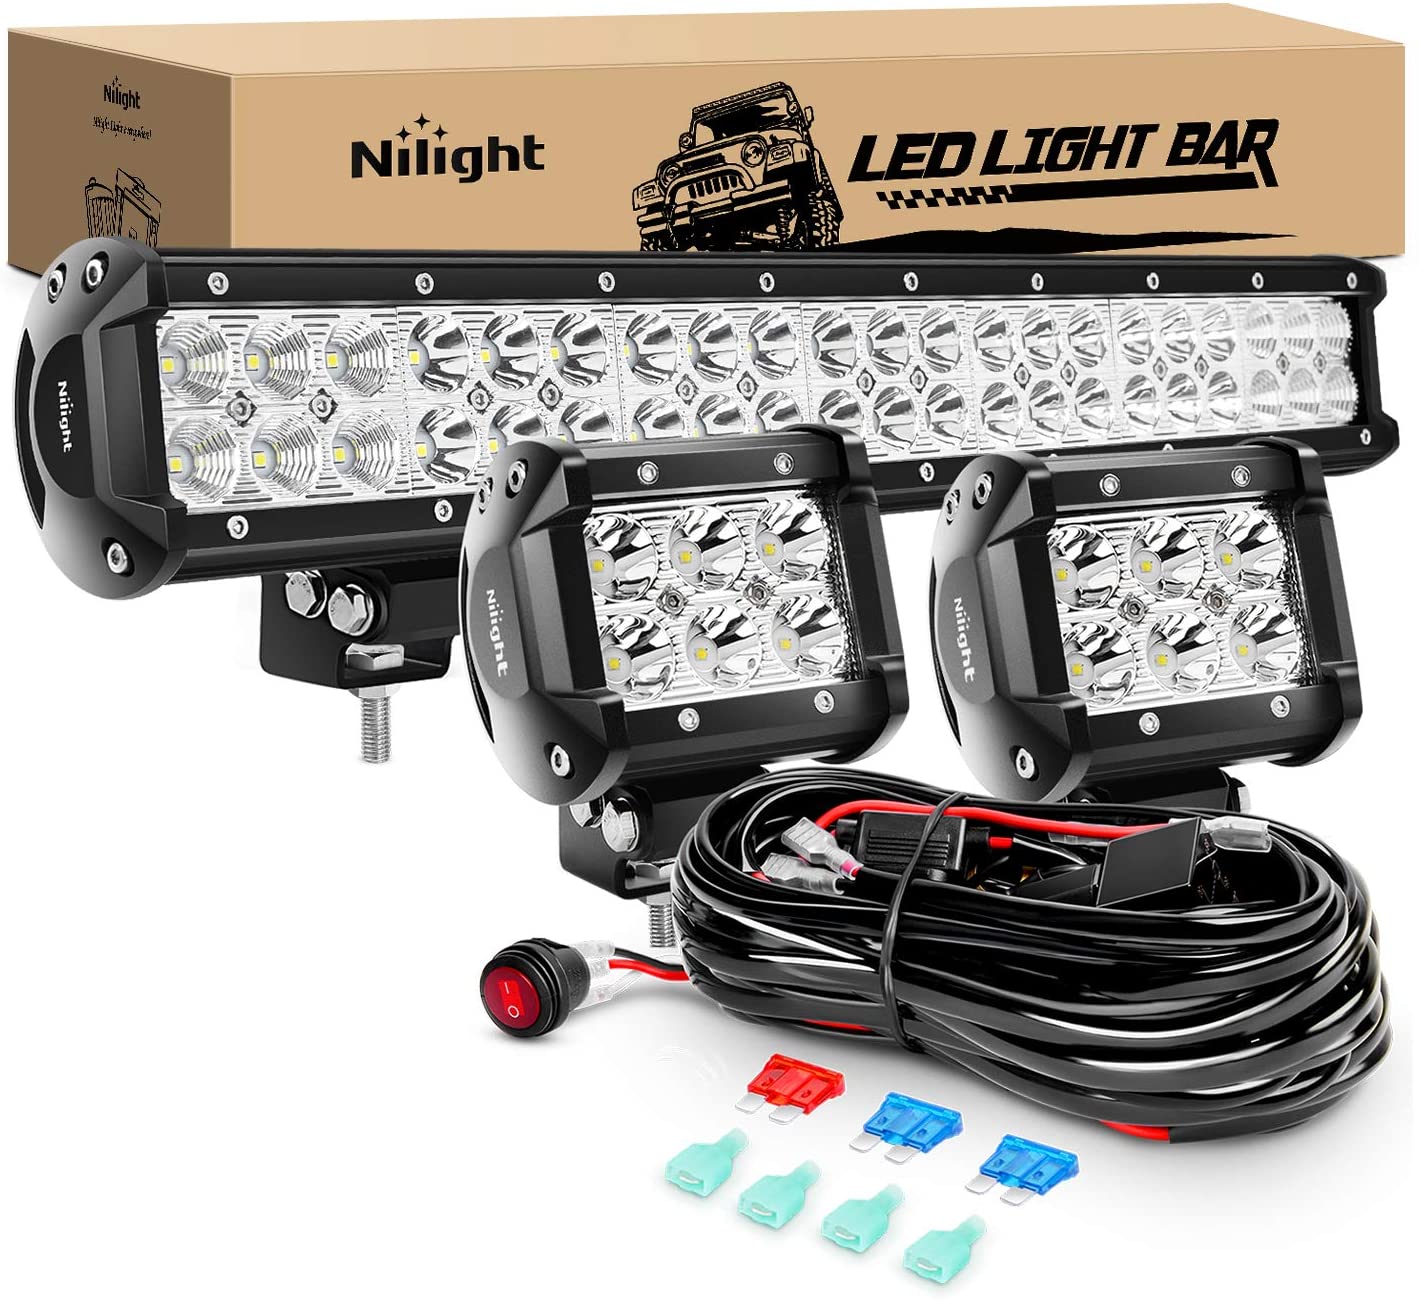 Nilight ZH002 Melting Resistant LED Light Bar Kit, 20-Inch